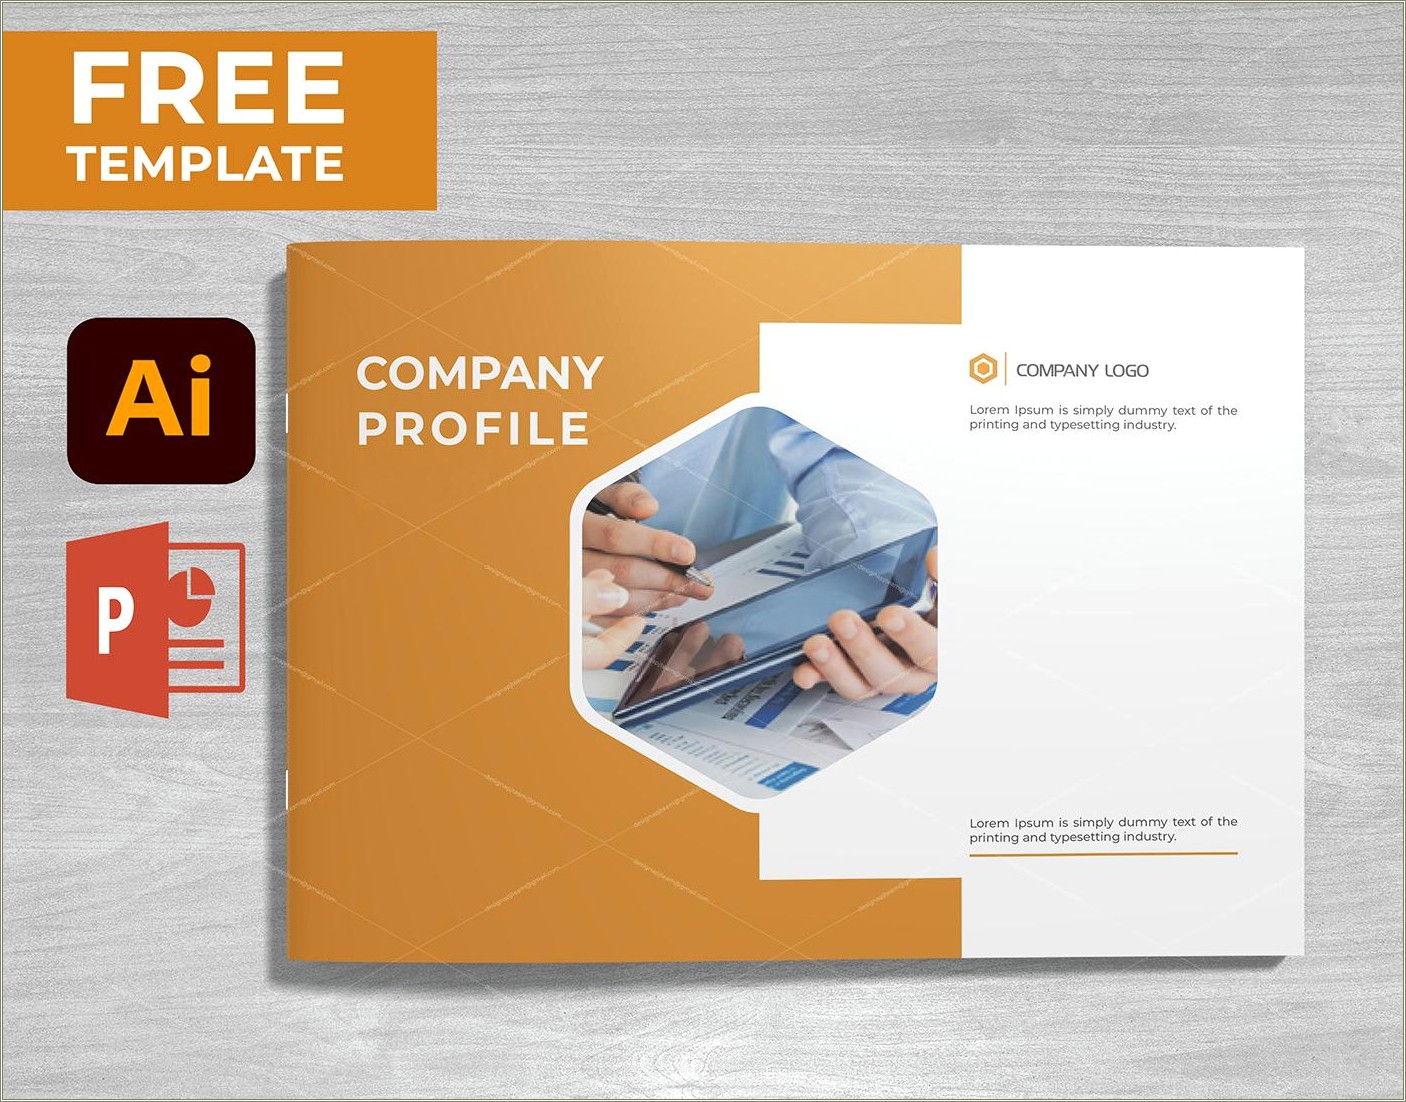 Free Company Profile Template Microsoft Publisher